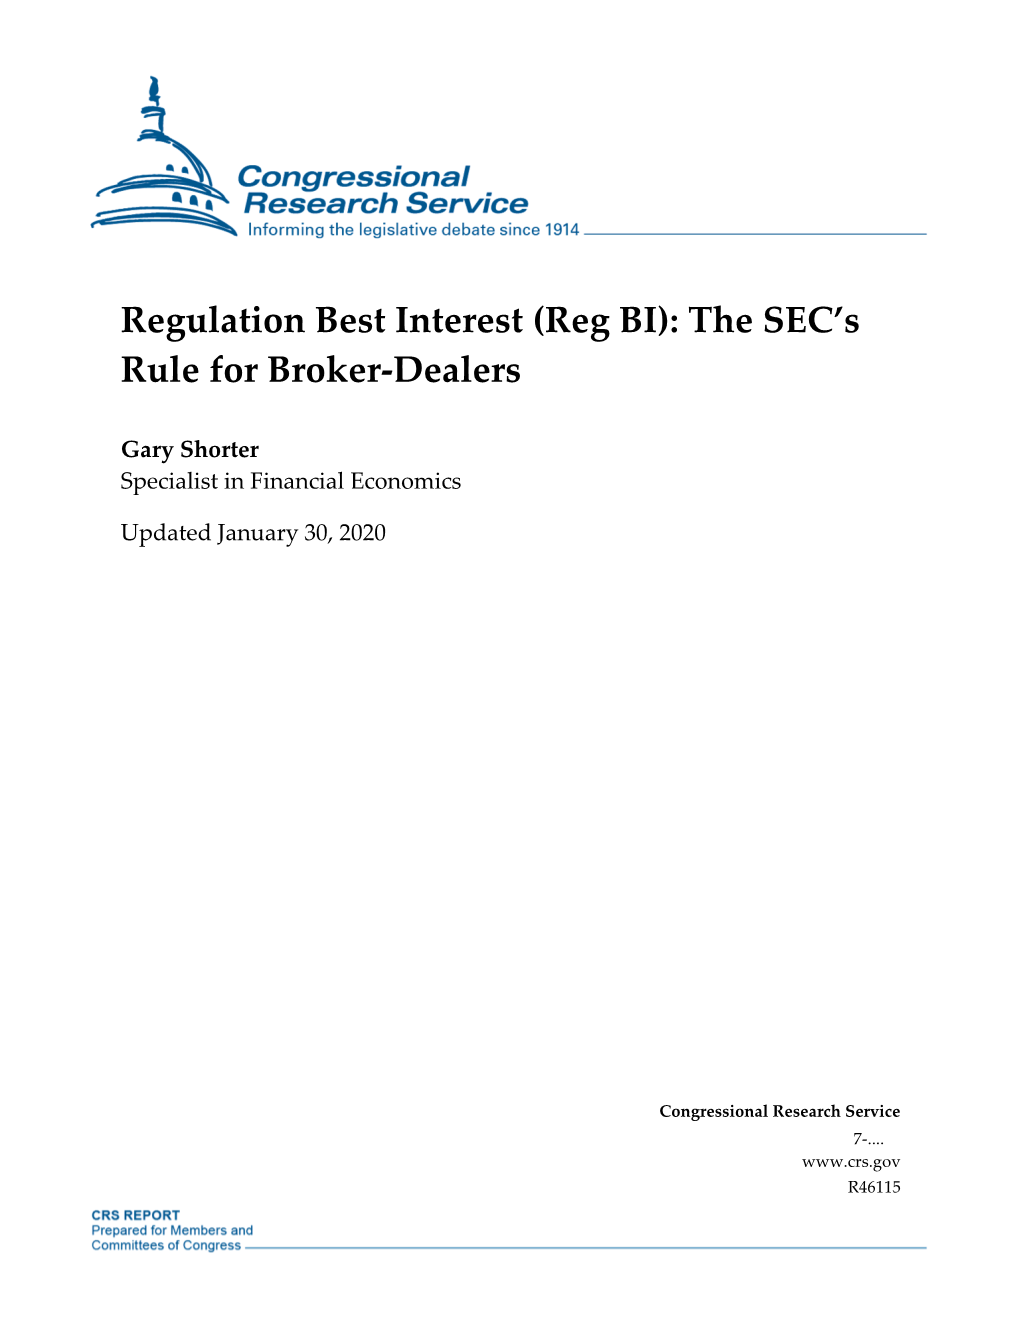 Regulation Best Interest (Reg BI): the SEC's Rule for Broker-Dealers